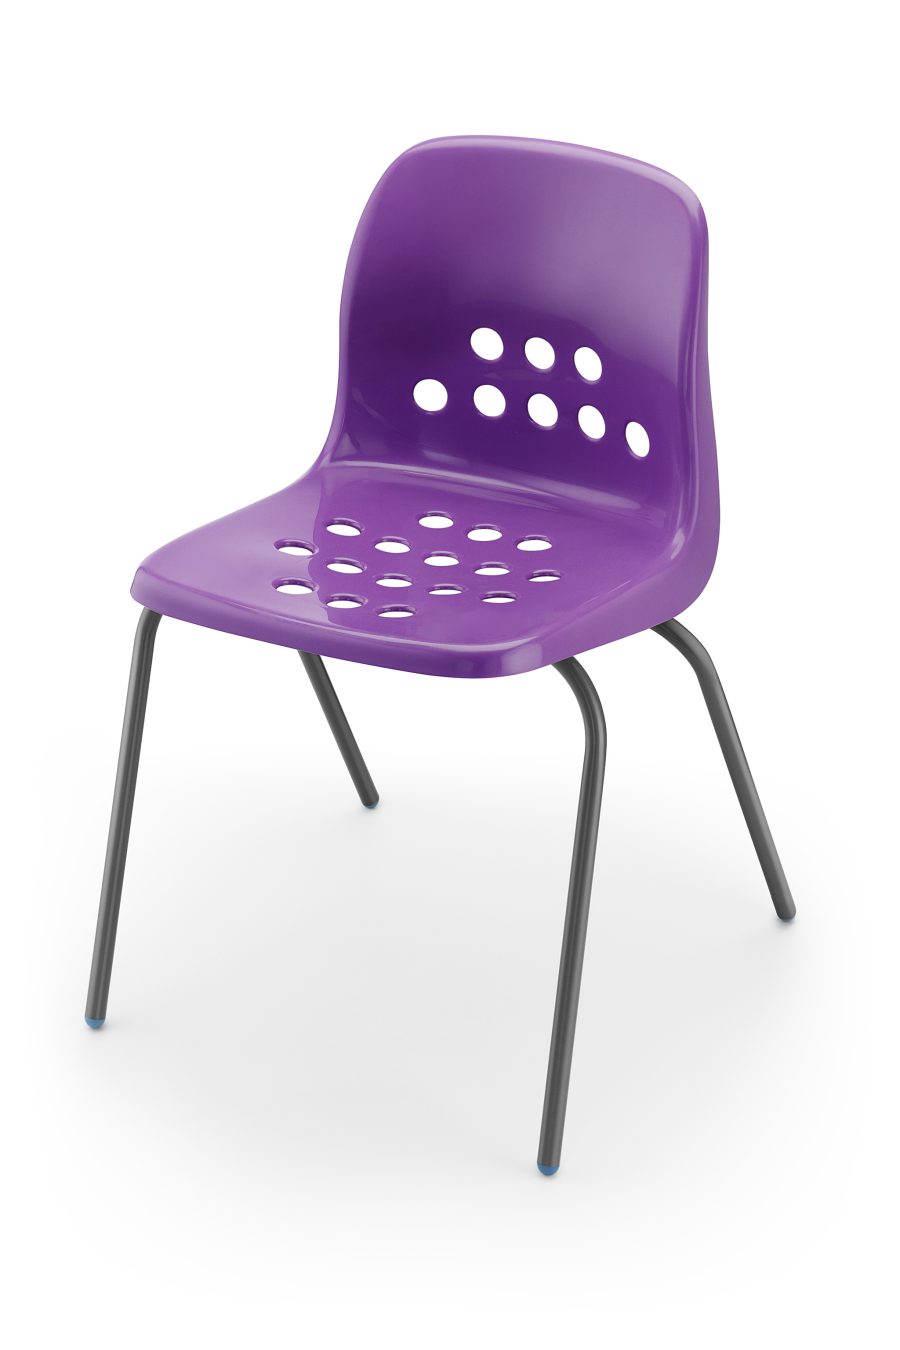 Pepper Pot Chair 3qf  Purple